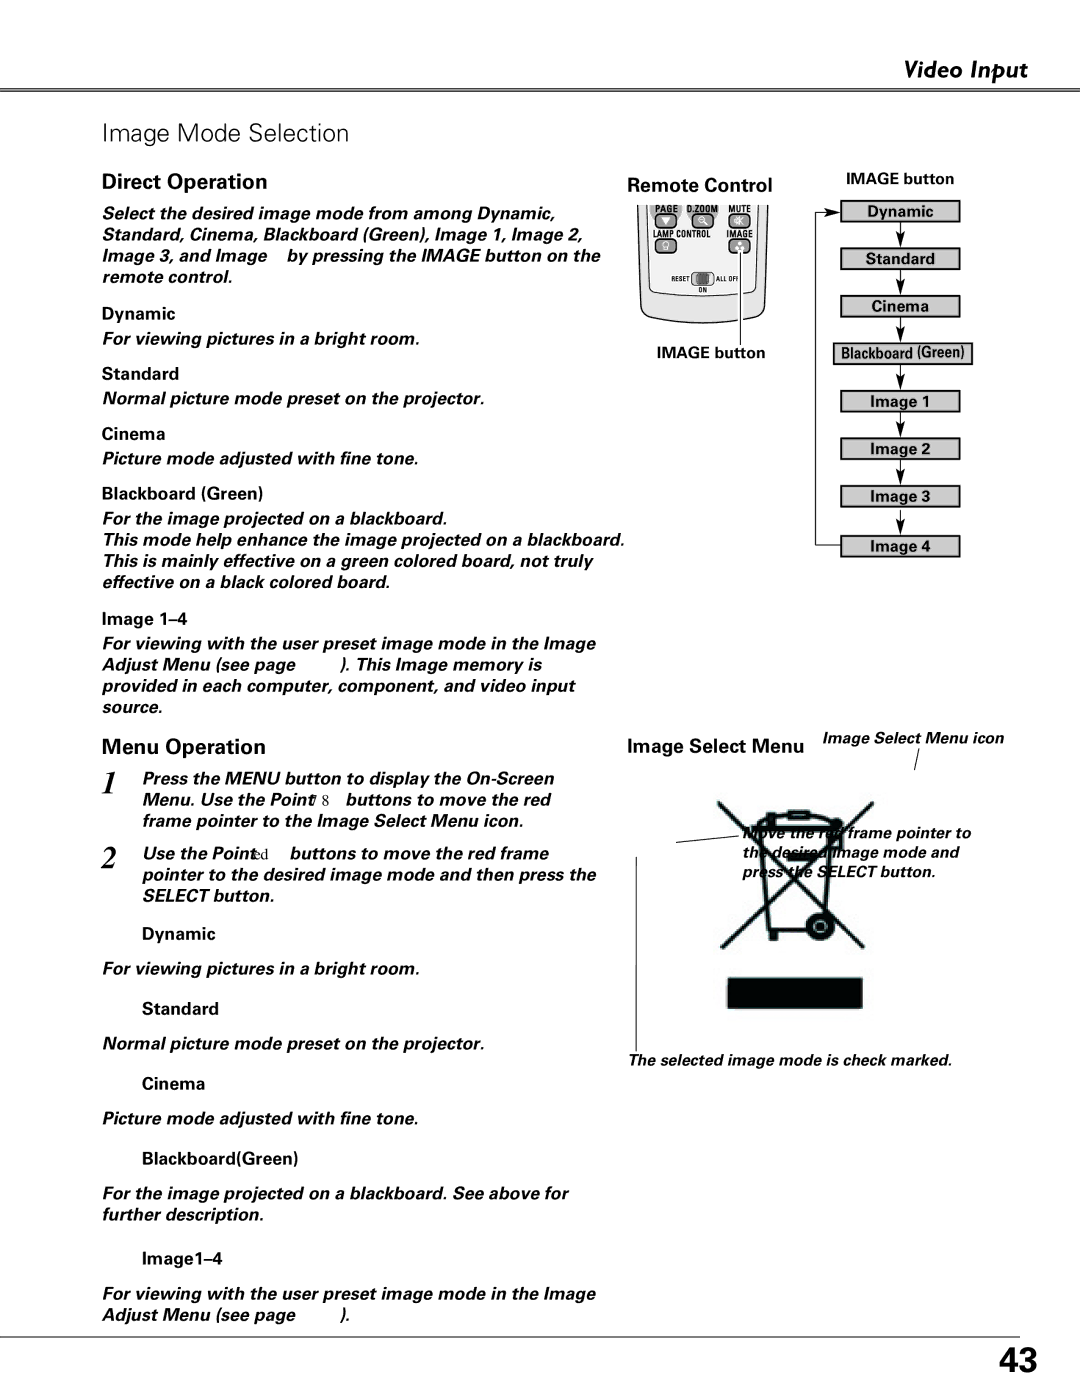 Eiki LC-XB40N owner manual Video Input Image Mode Selection, Cinema, Image1-4 